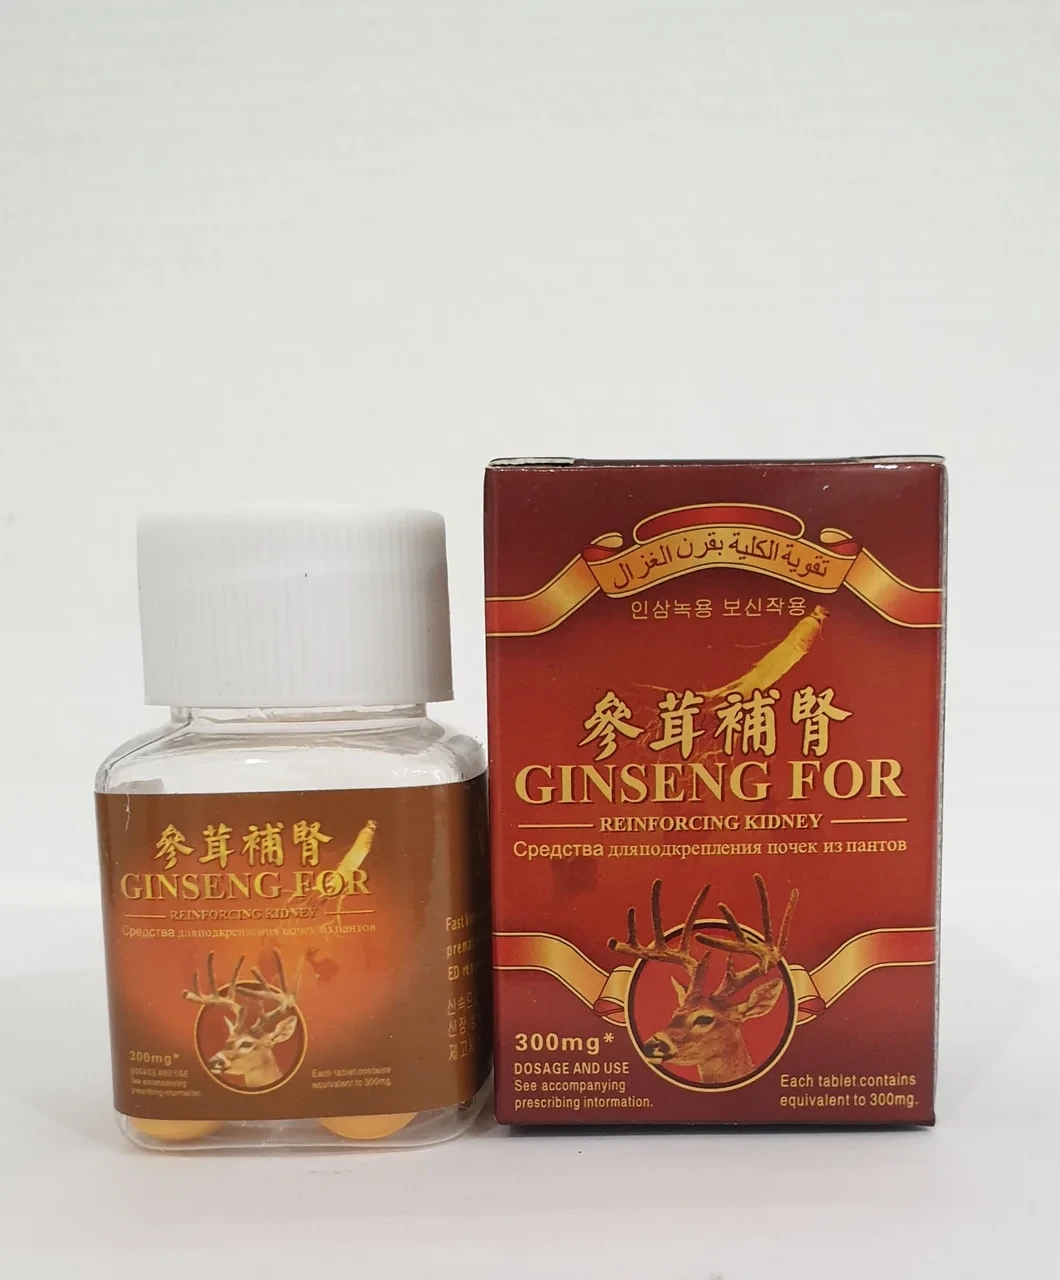 Ginseng For виагра (Гинсенг Фор Женьшень)  средство для повышения потенции банка 300mg*10 таблеток